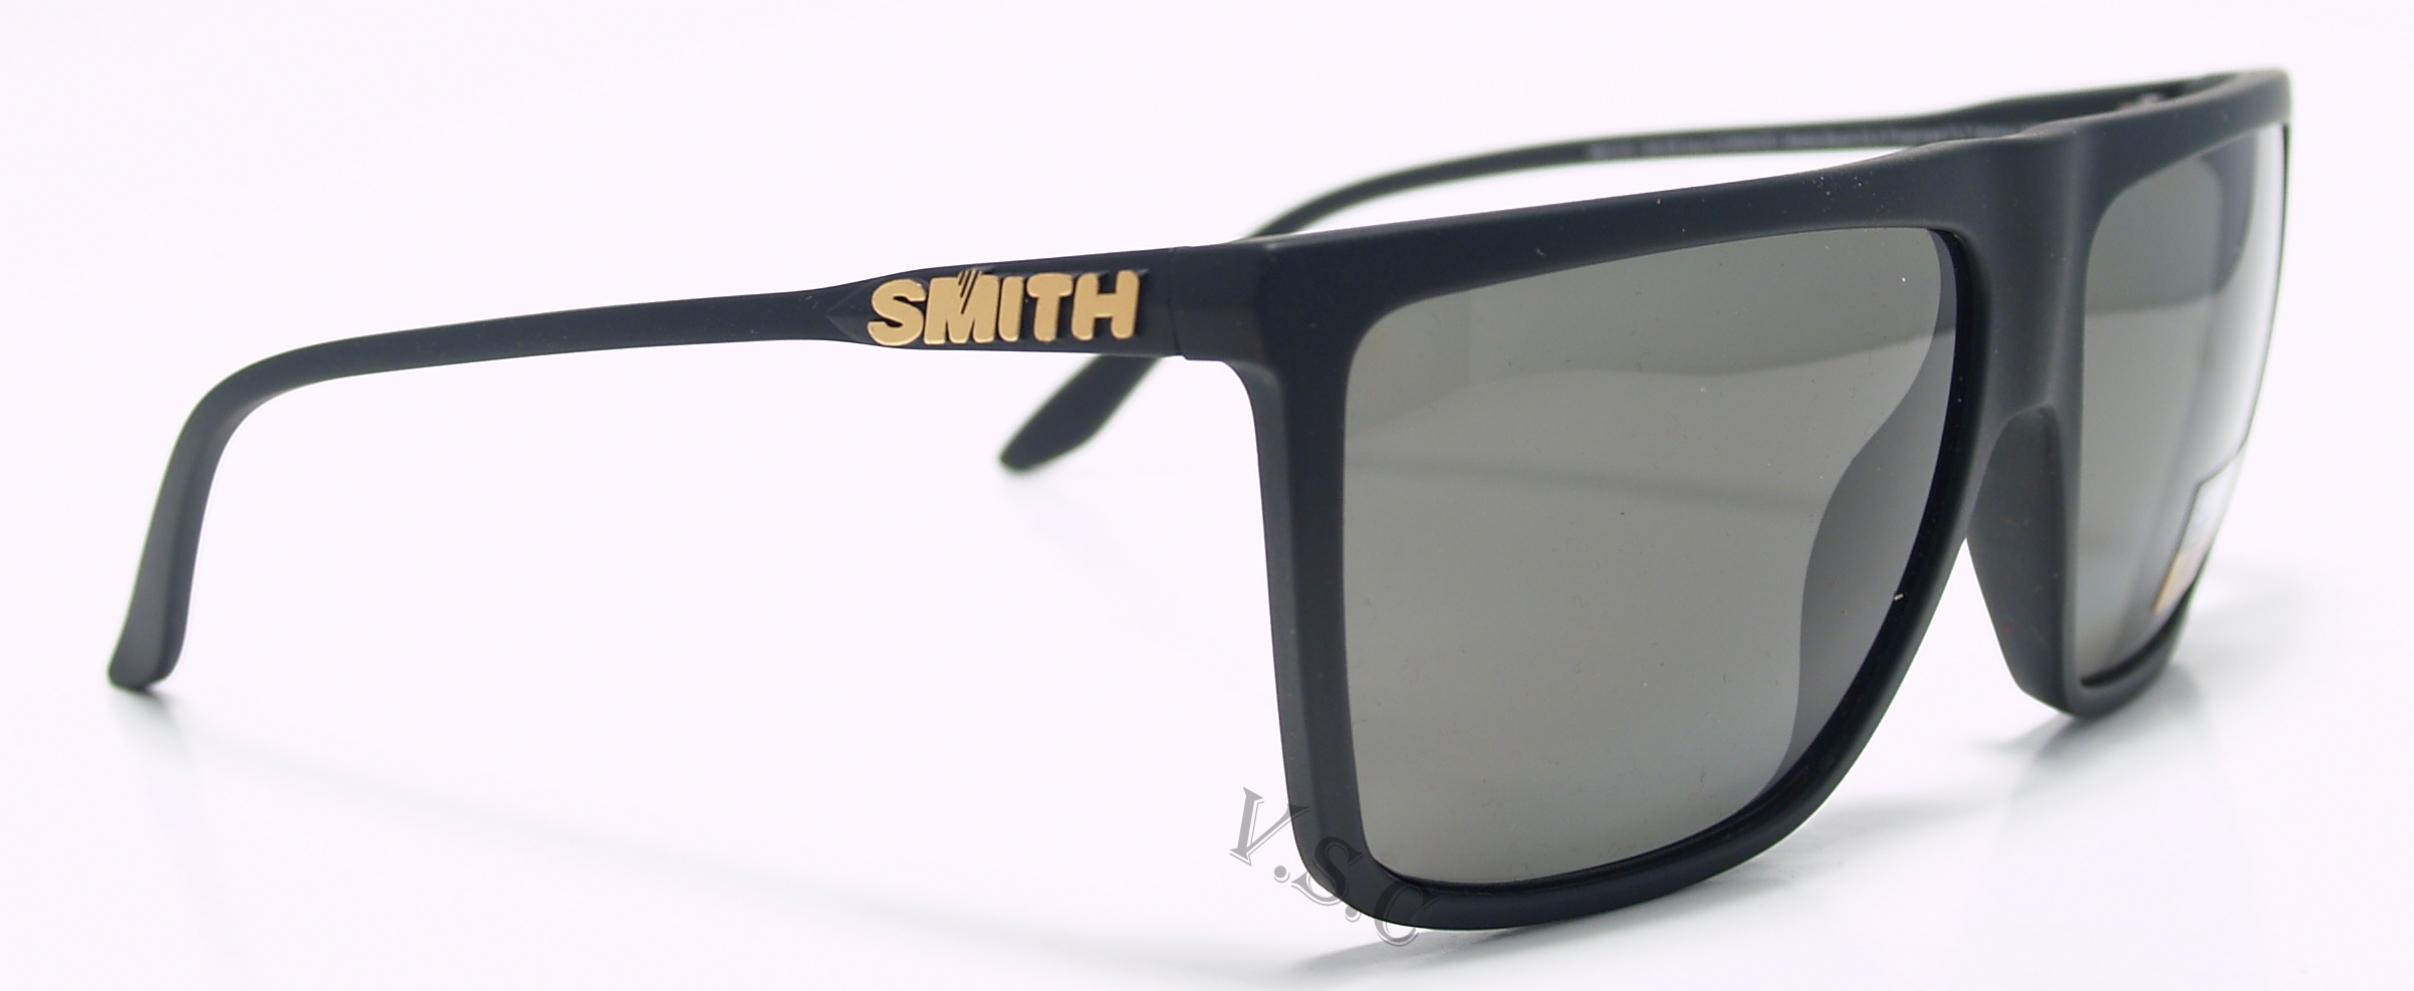 Smith Optics Cornice Sunglasses